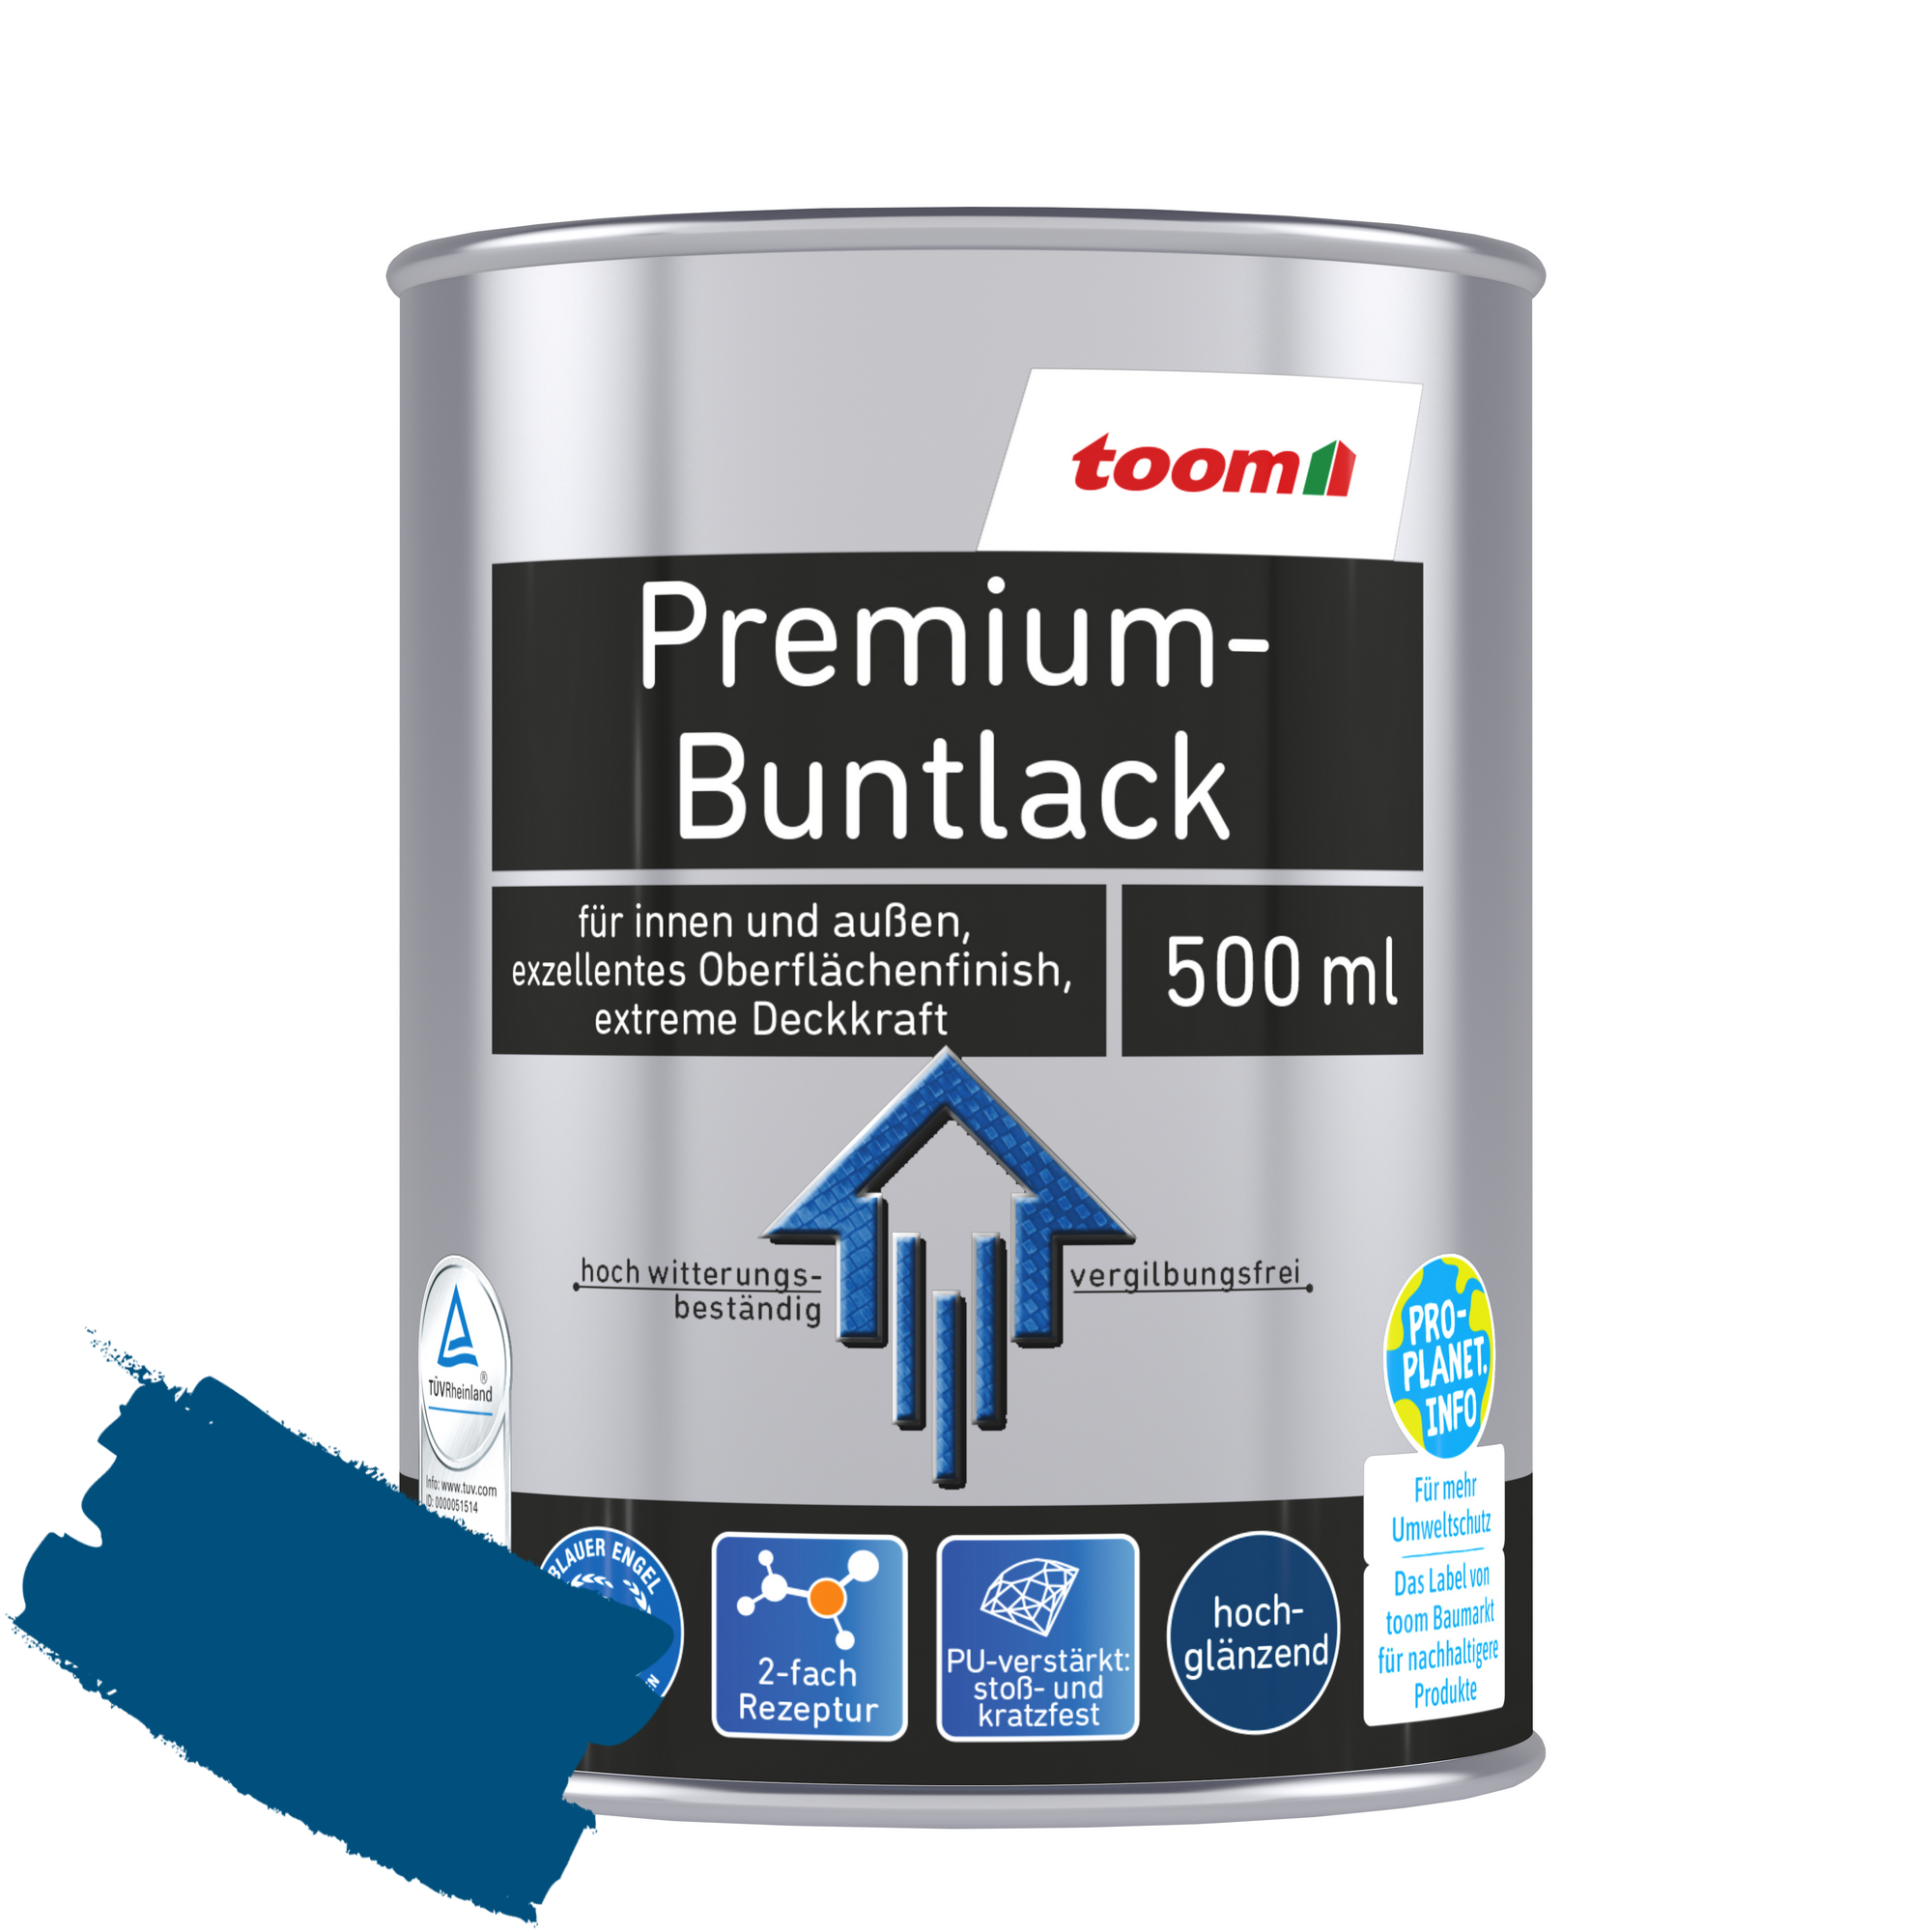 Premium-Buntlack enzianblau glänzend 500 ml + product picture